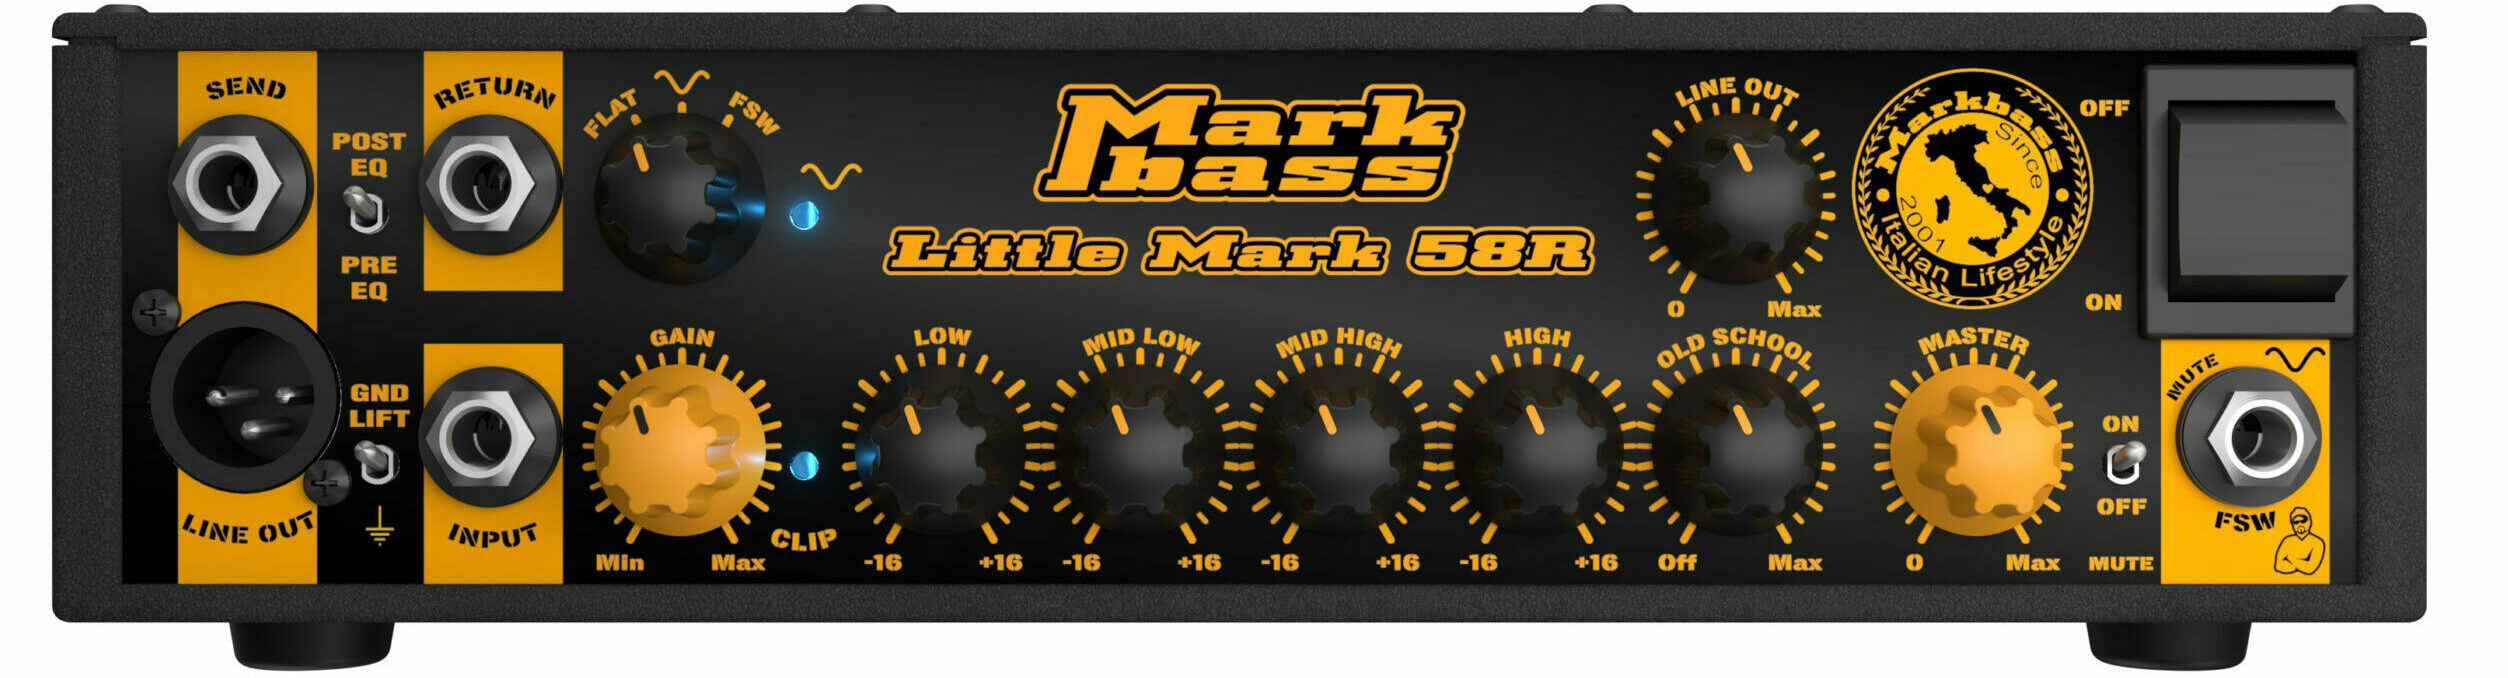 Markbass Little Mark 58r Head 500w - Versterker top voor bas - Variation 1